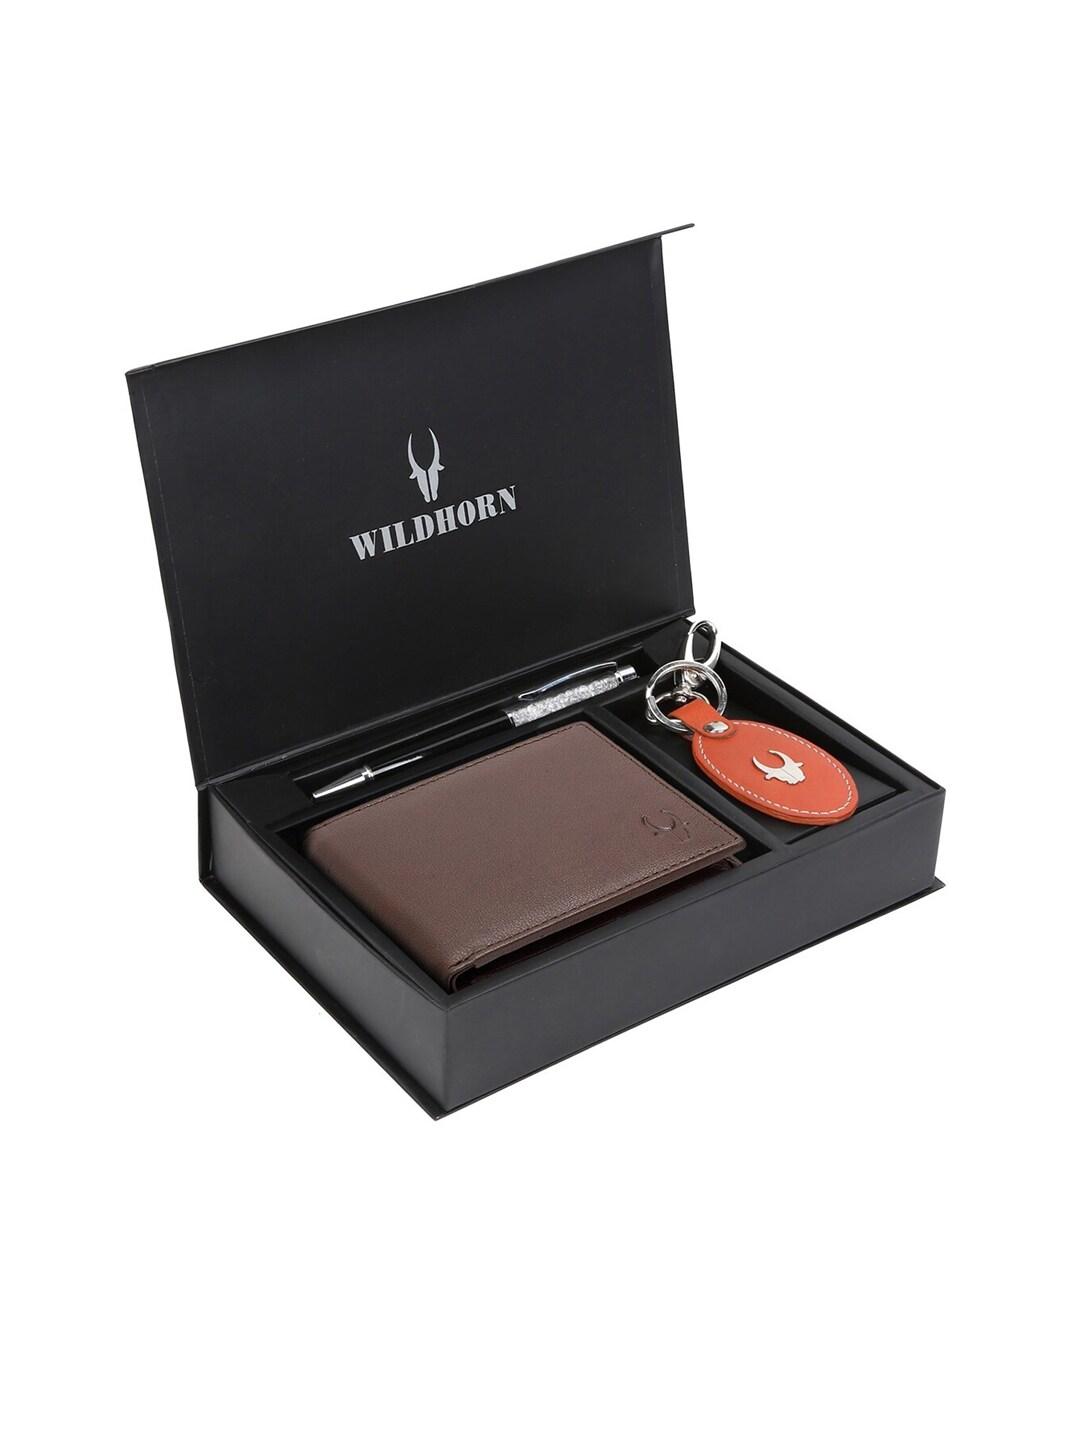 wildhorn men brown & blue rfid protected genuine leather wallet gift set